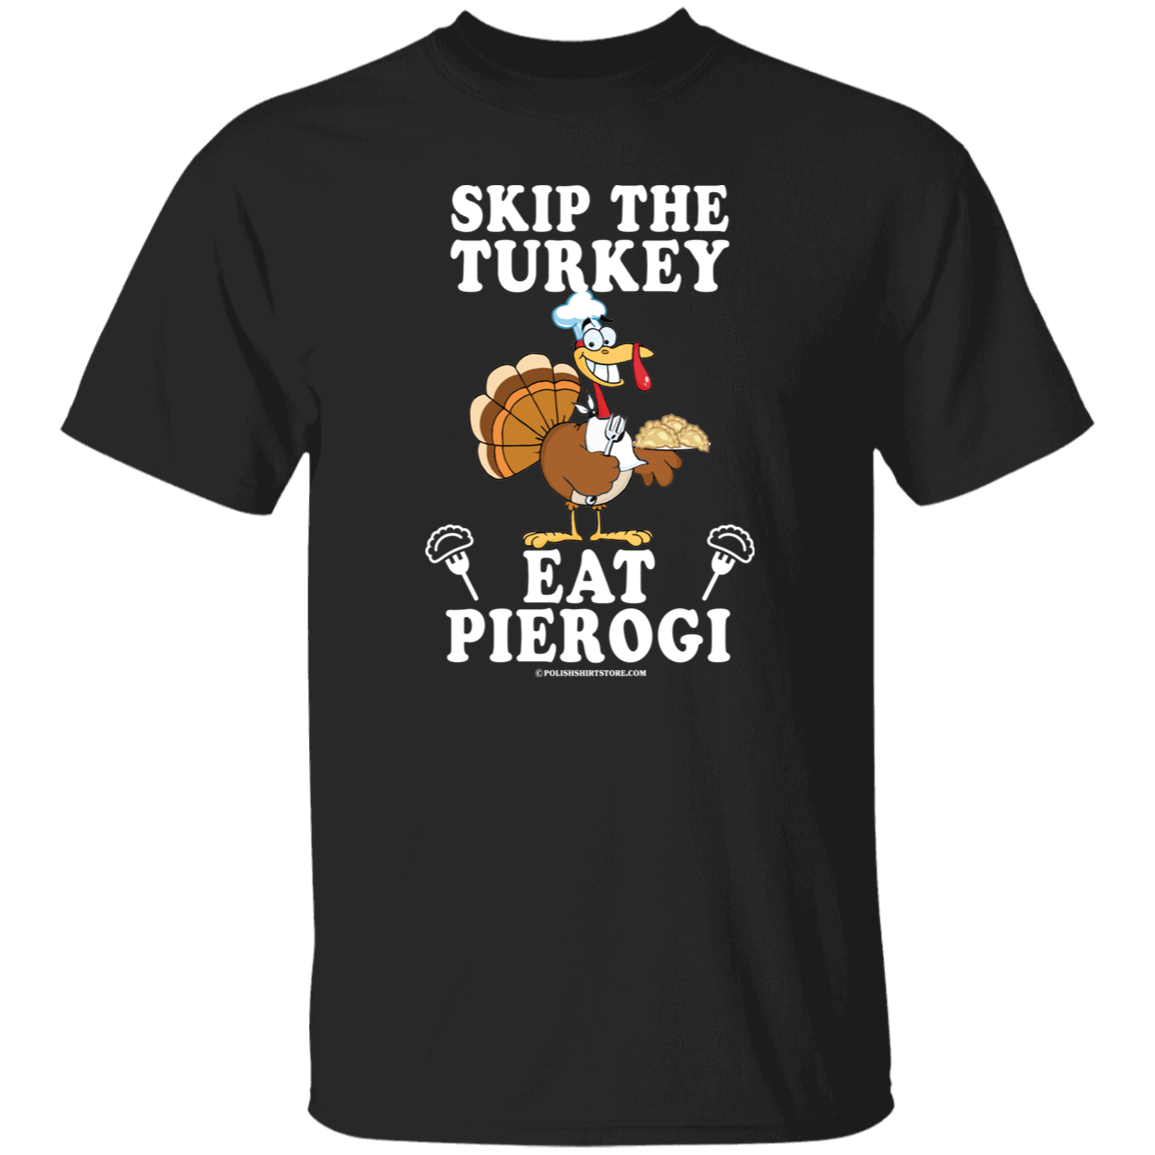 Skip The Turkey Eat Pierogi Apparel CustomCat G500 5.3 oz. T-Shirt Black S